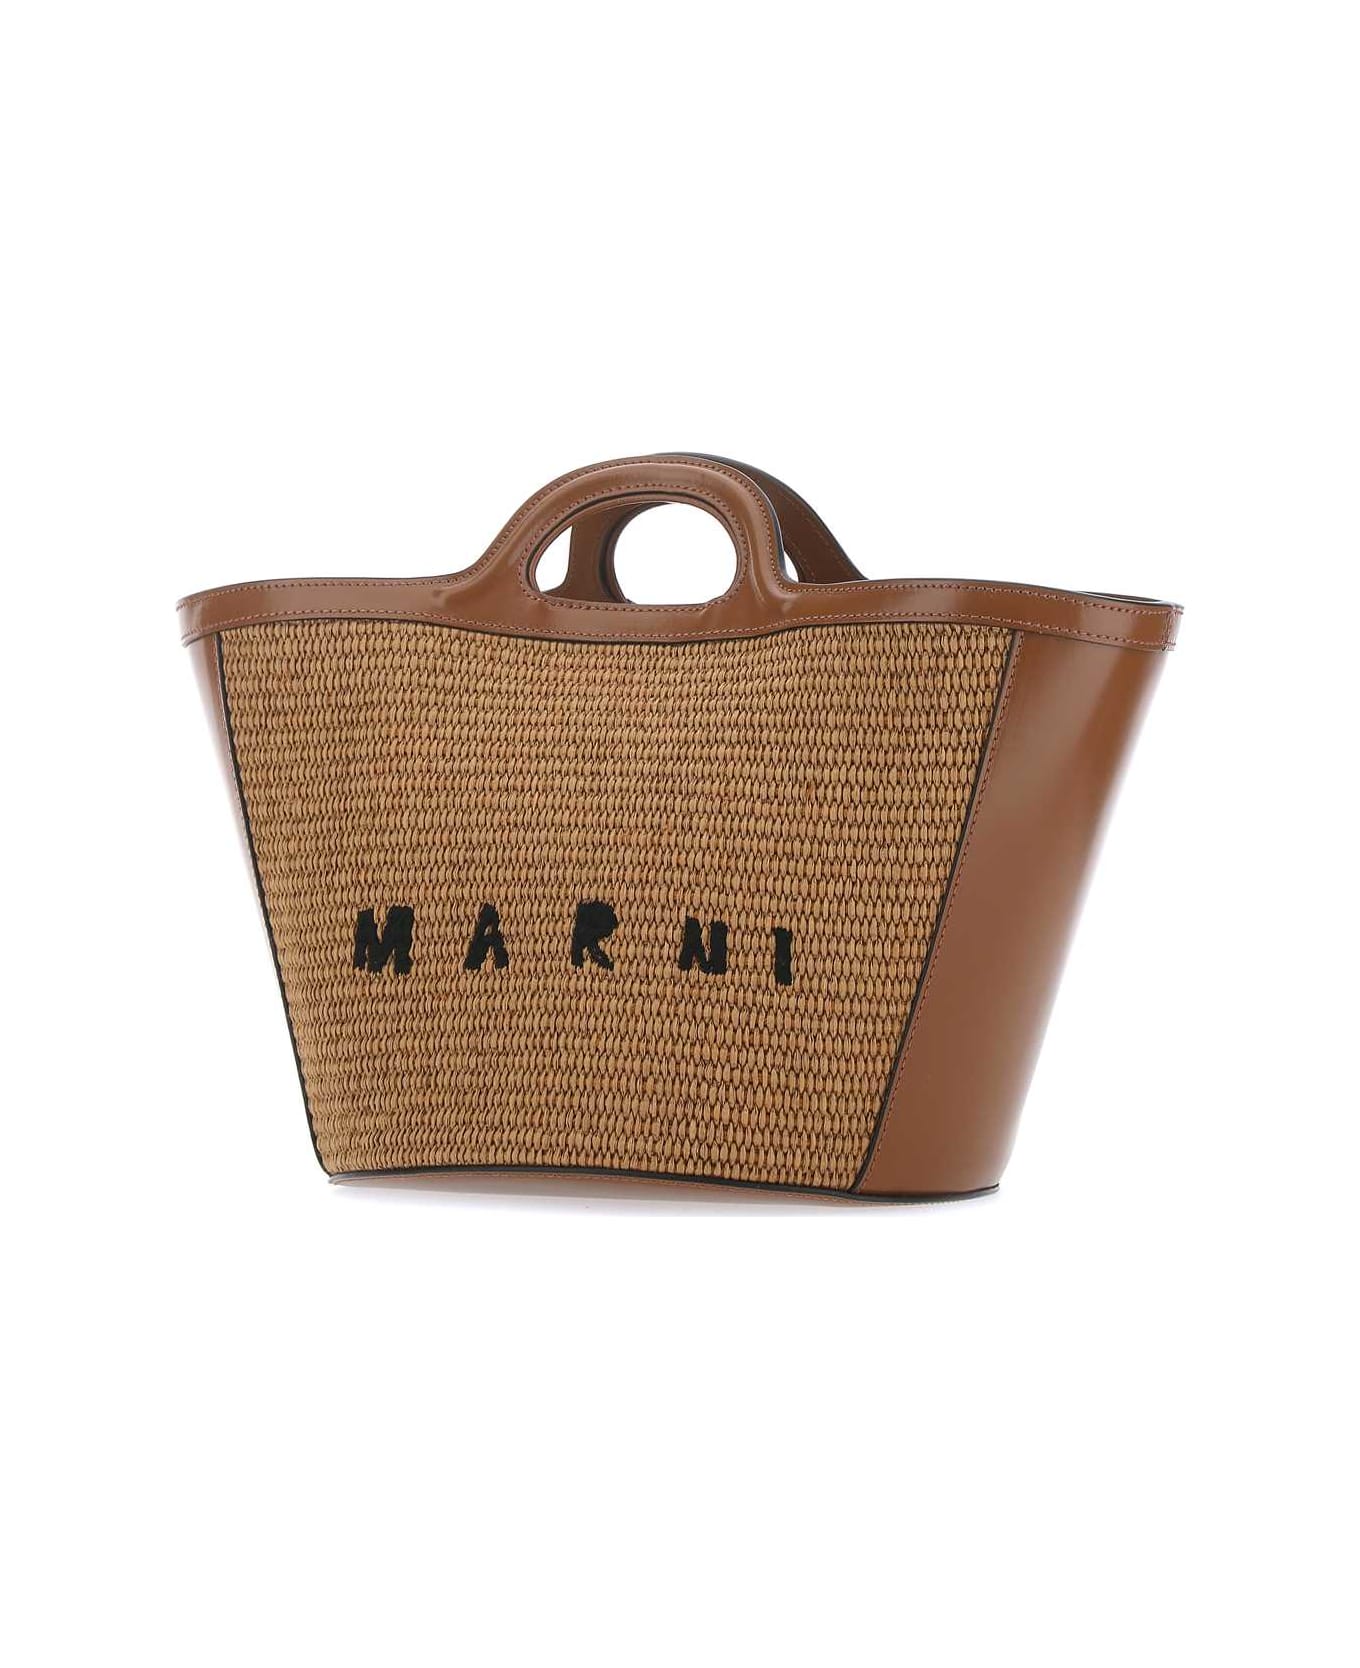 Marni Two-tone Leather And Raffia Small Tropicalia Summer Handbag - RAW SIENNA トートバッグ